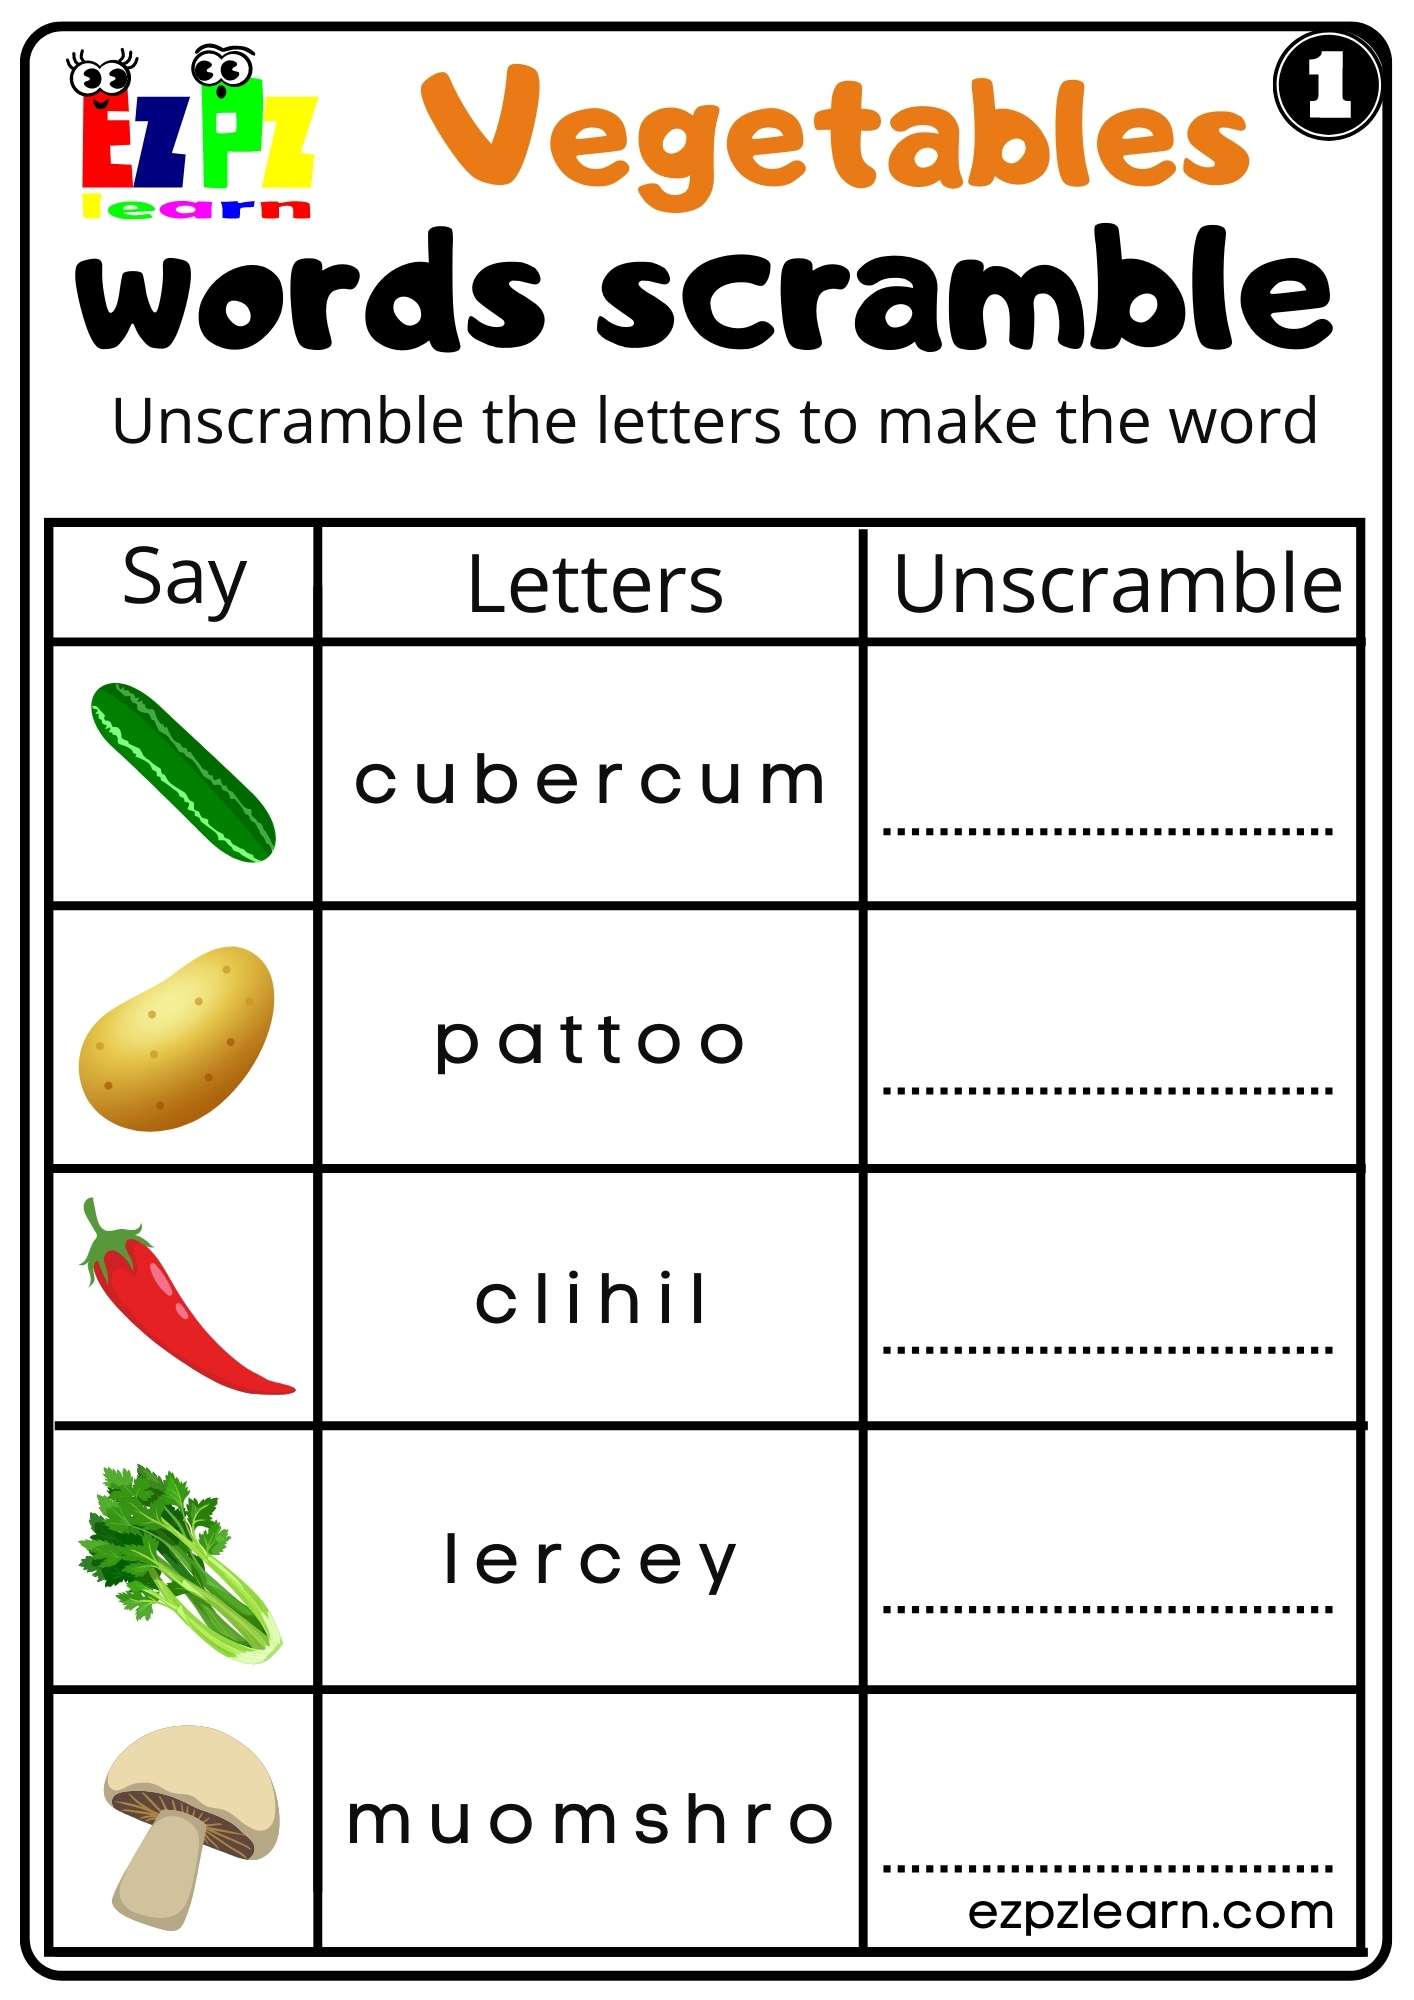 Vegetable Scramble Worksheet Answers